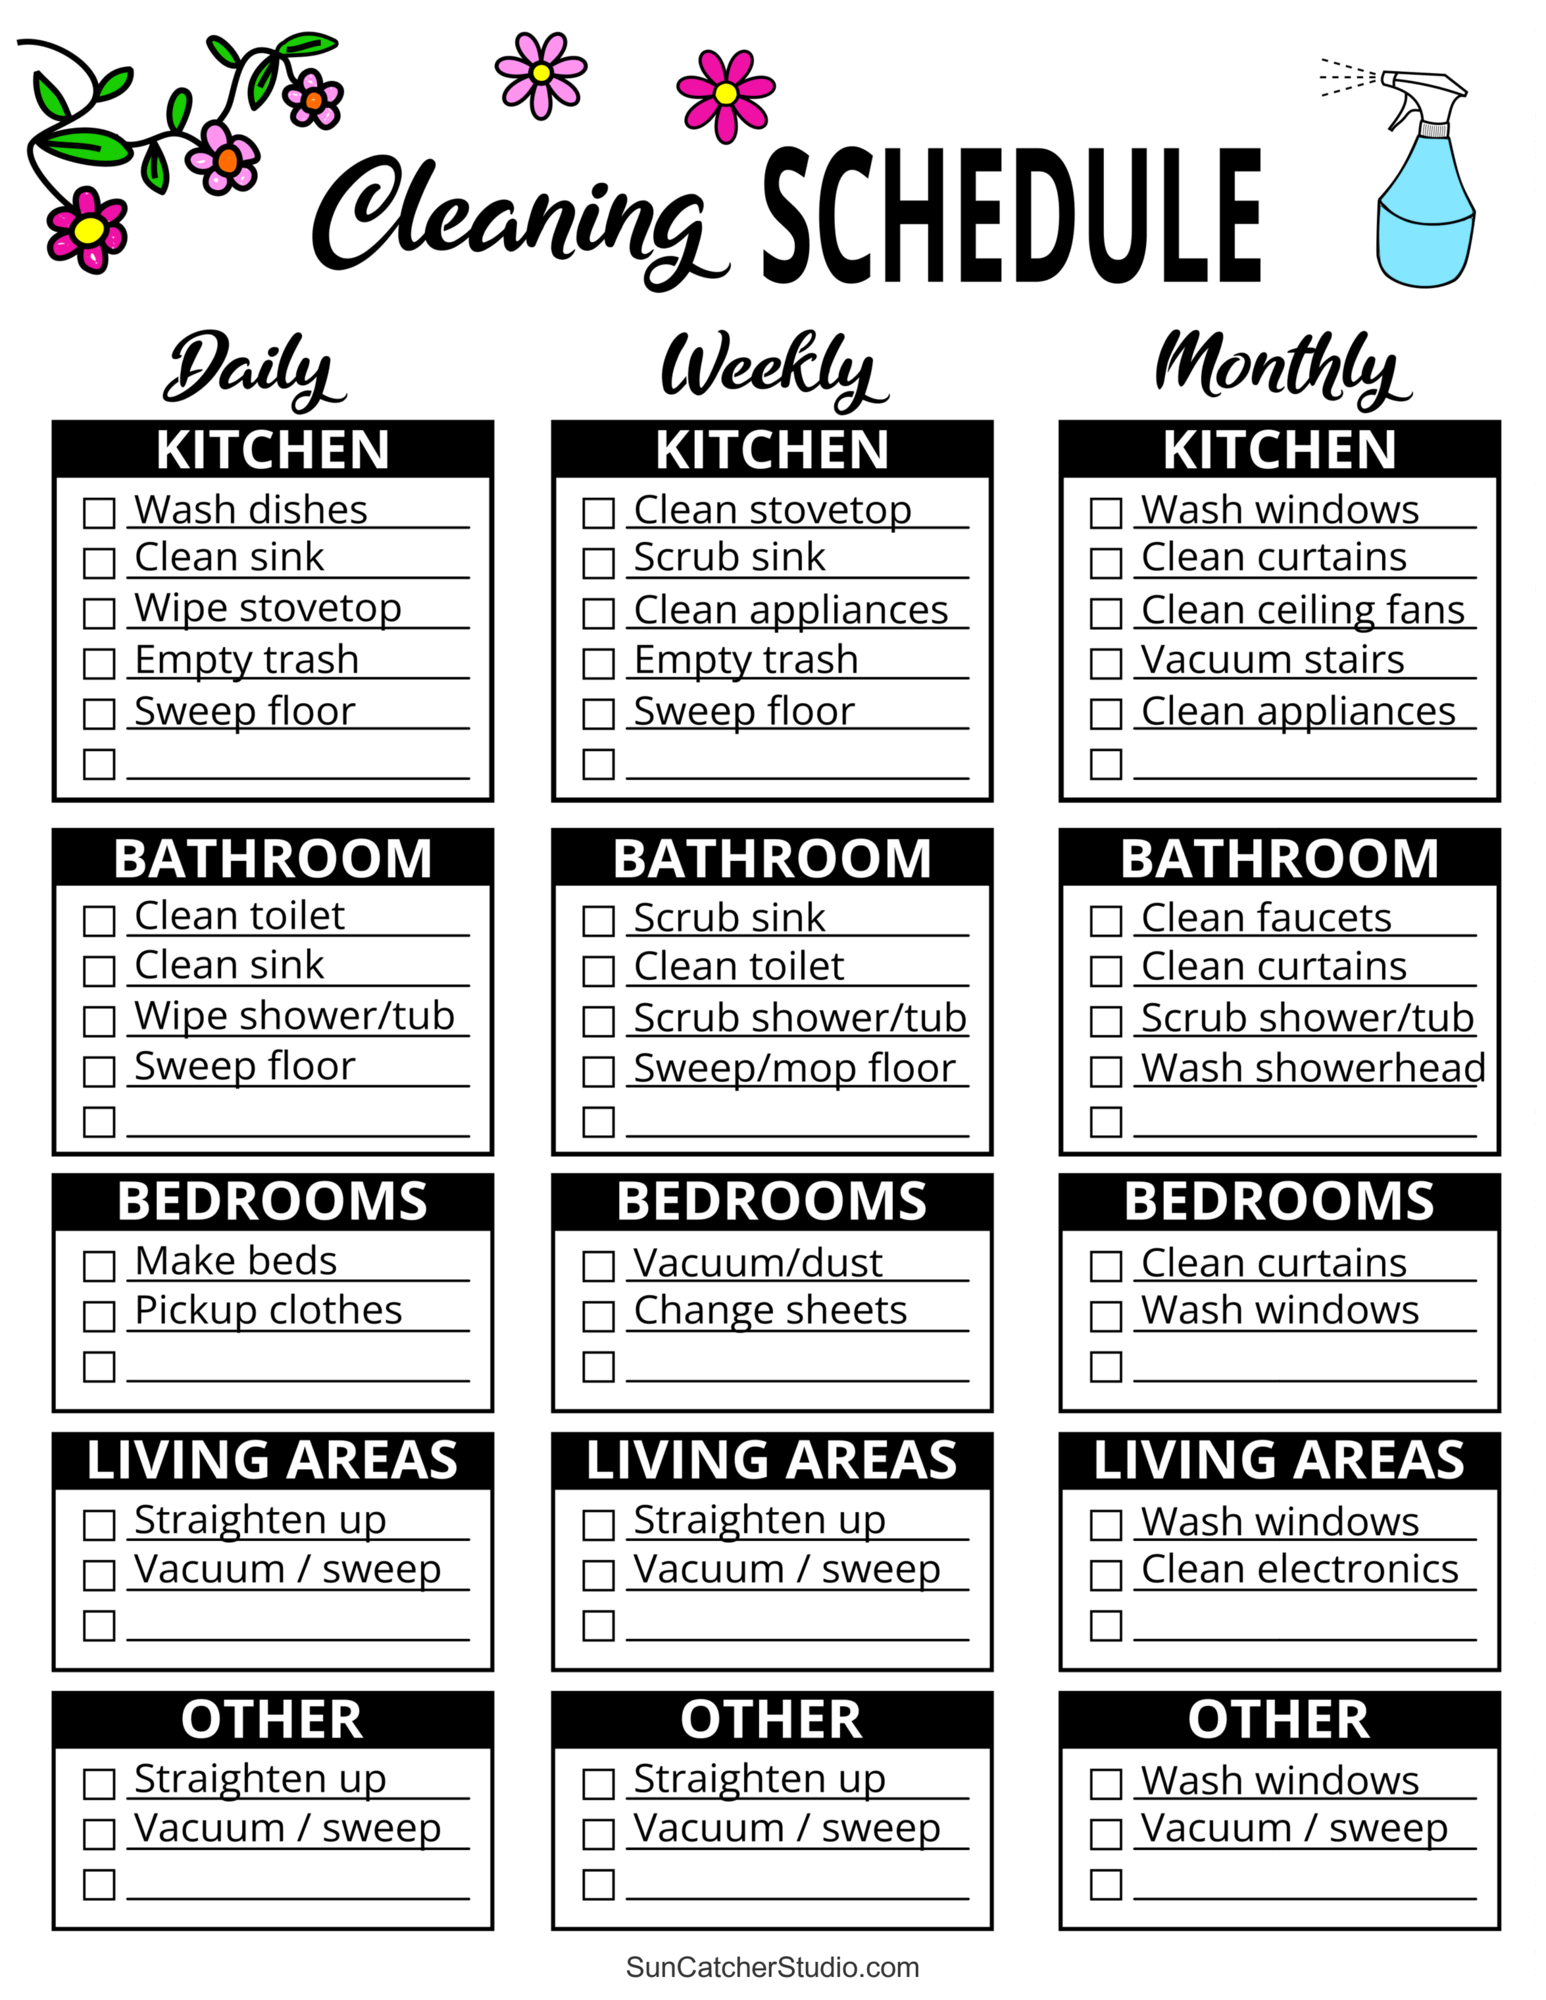 Cleaning Schedule Checklist 010101 Fefefe 